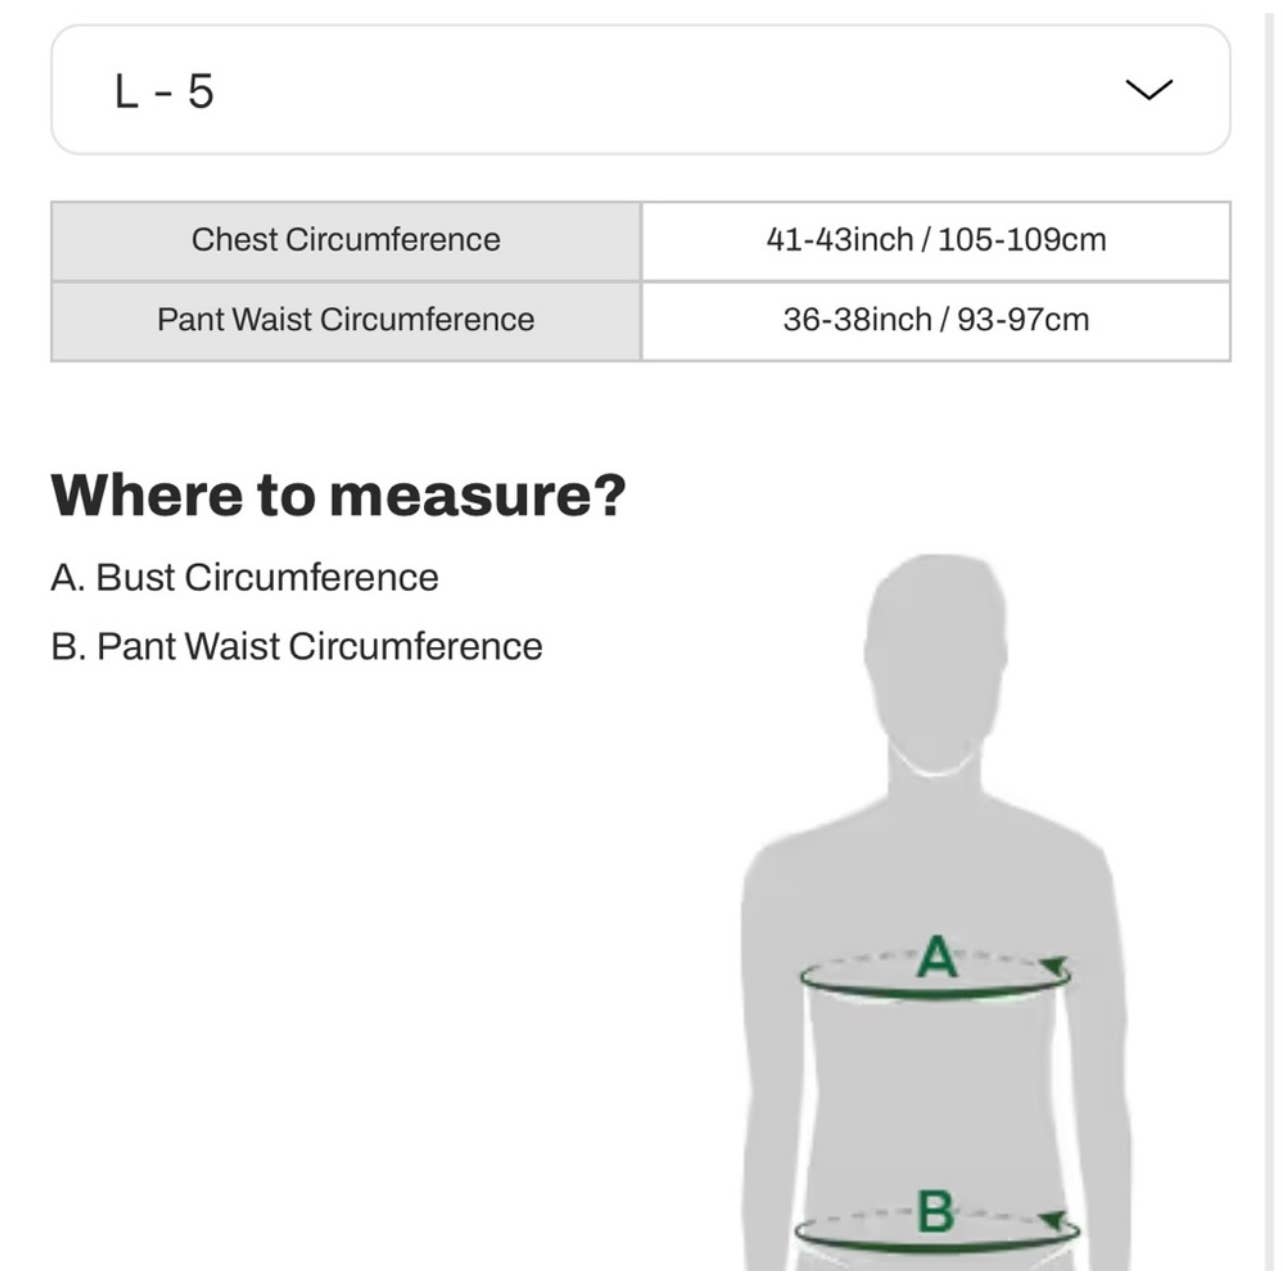 Lacoste Men's Gray Crewneck Sweatshirt w/ Signature Decal on Chest, Size Large